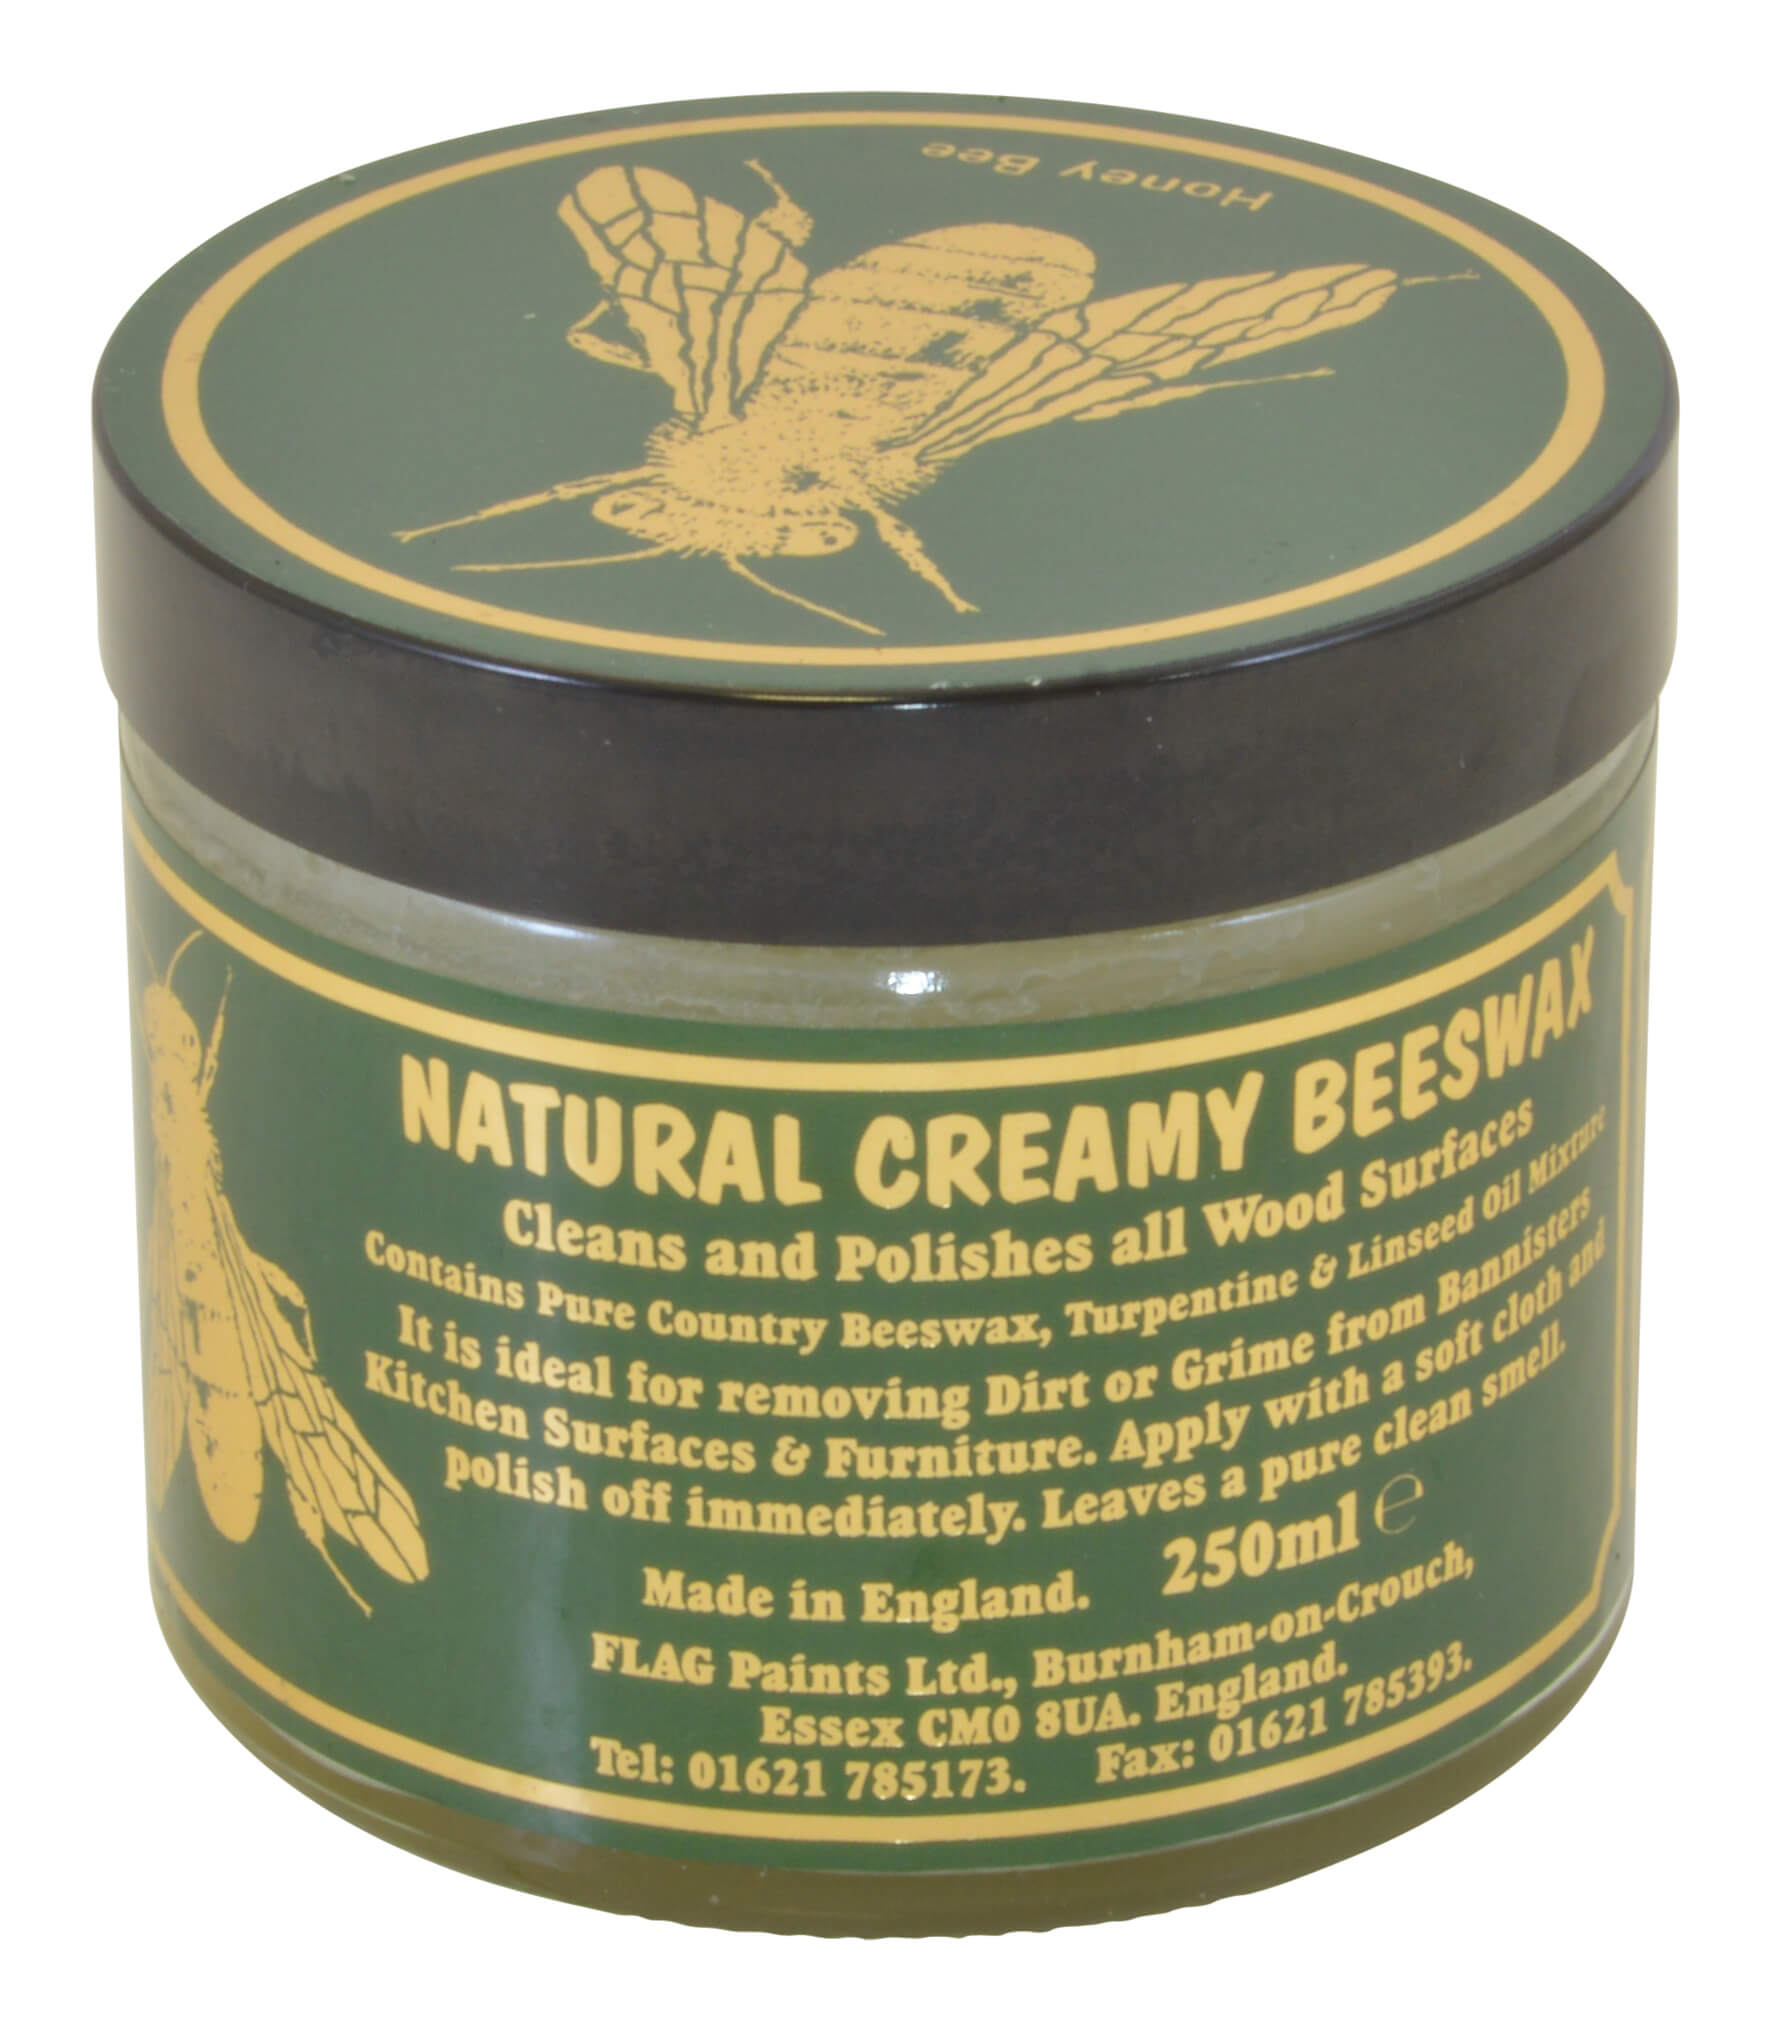 Natural Creamy Beeswax - 250ml